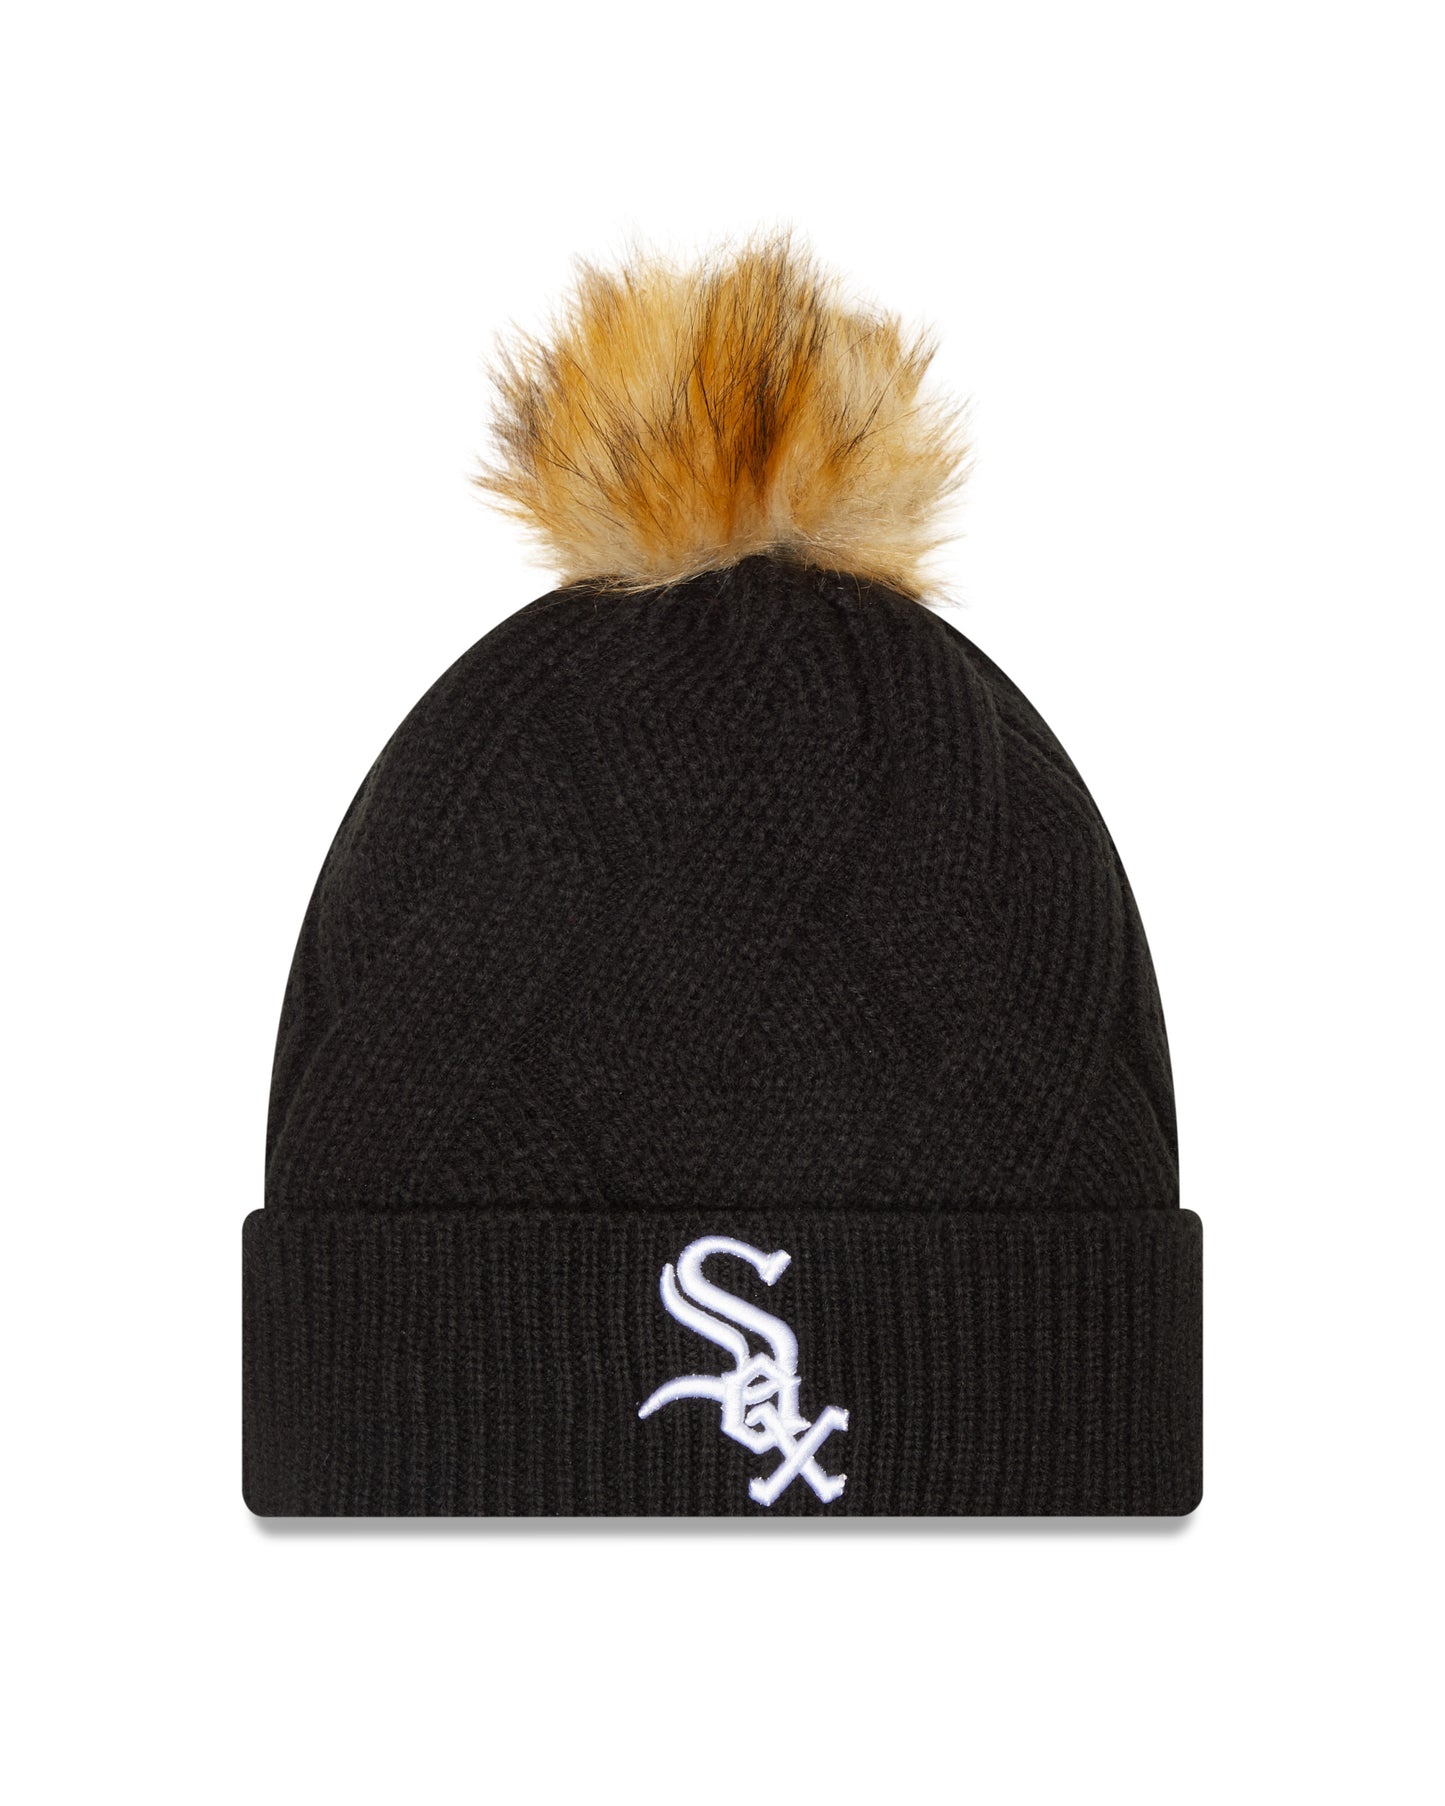 Women's Chicago White Sox New Era Black Snowy Cuffed Knit Hat with Pom